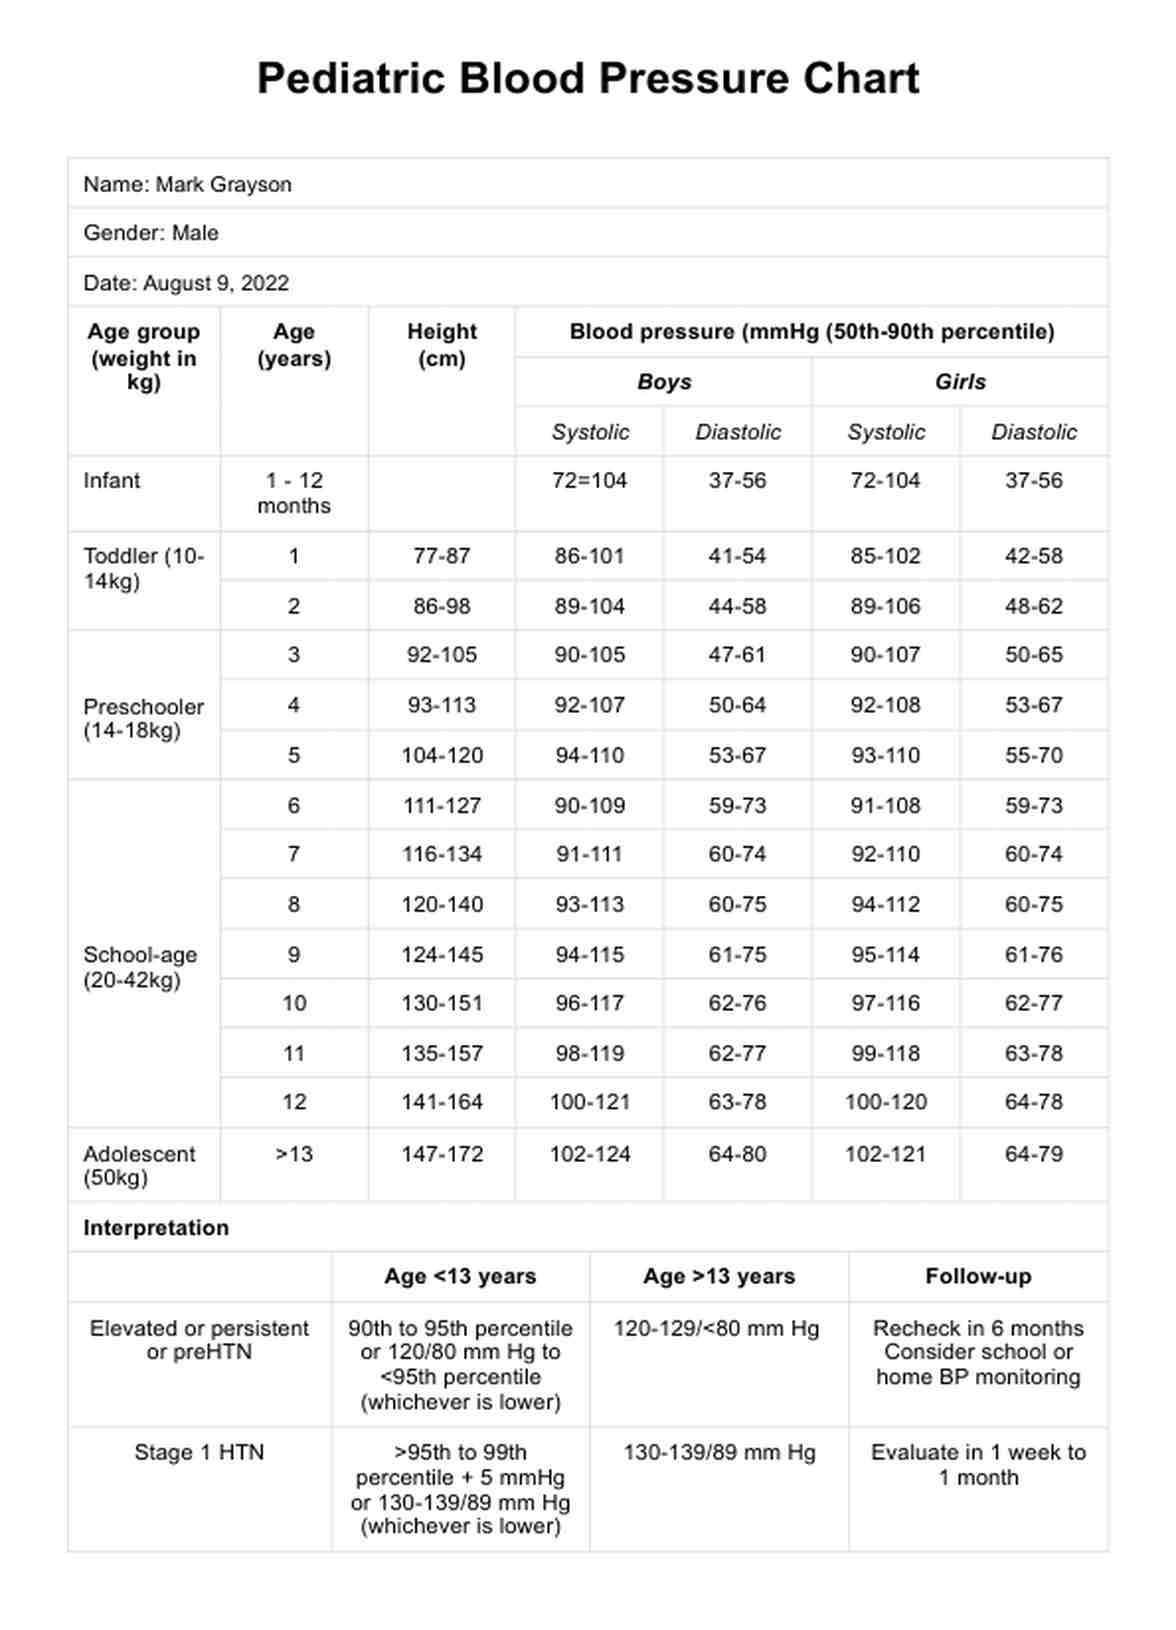 Pediatric Blood Pressure Chart PDF Example